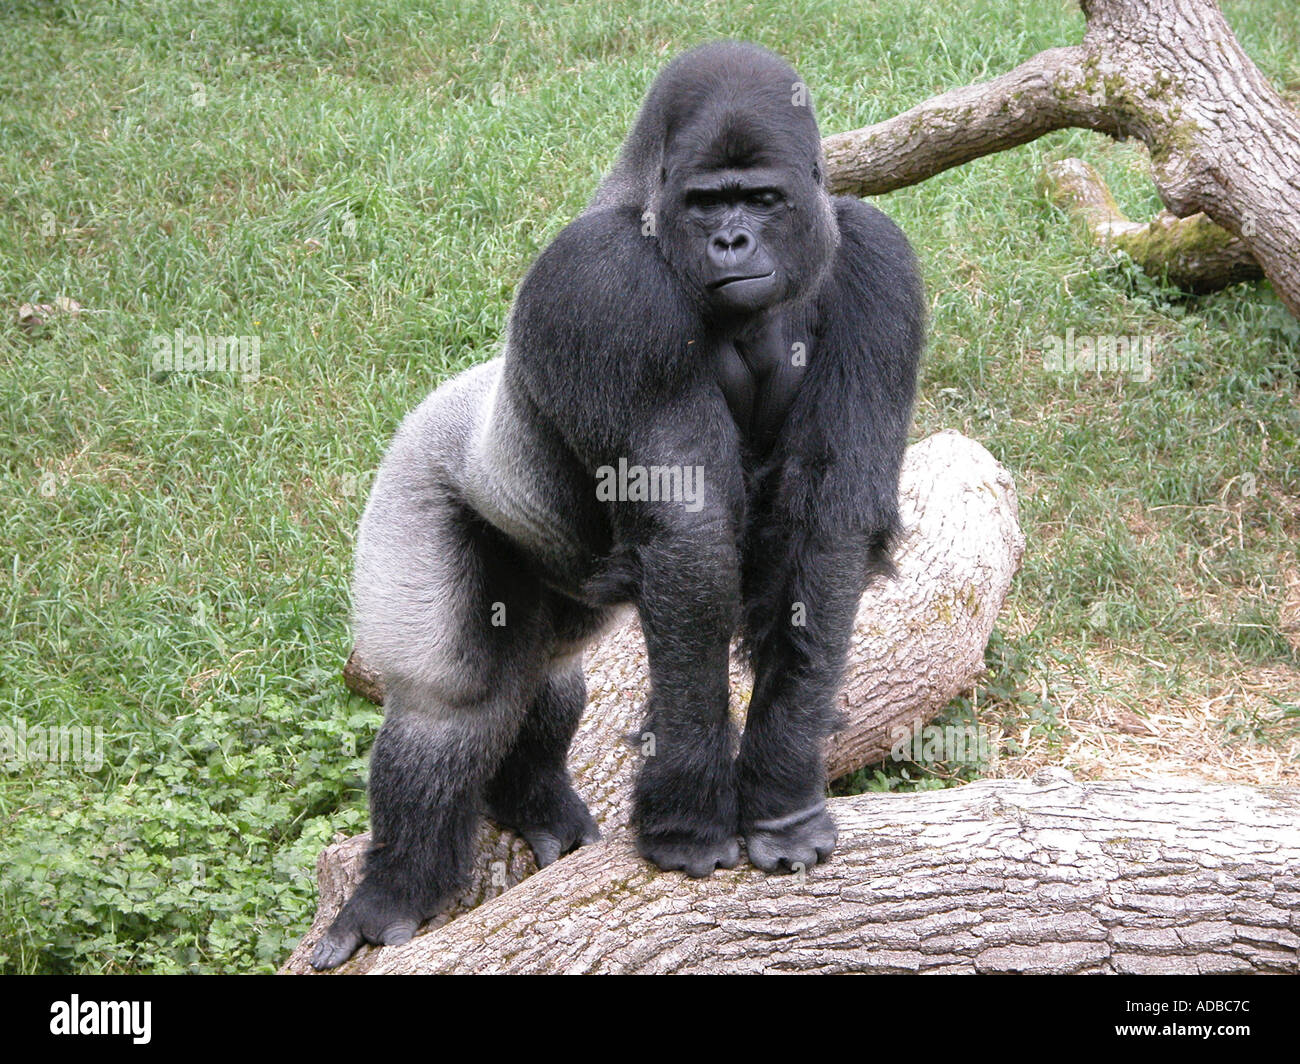 Port lympne wild animal park gorilla